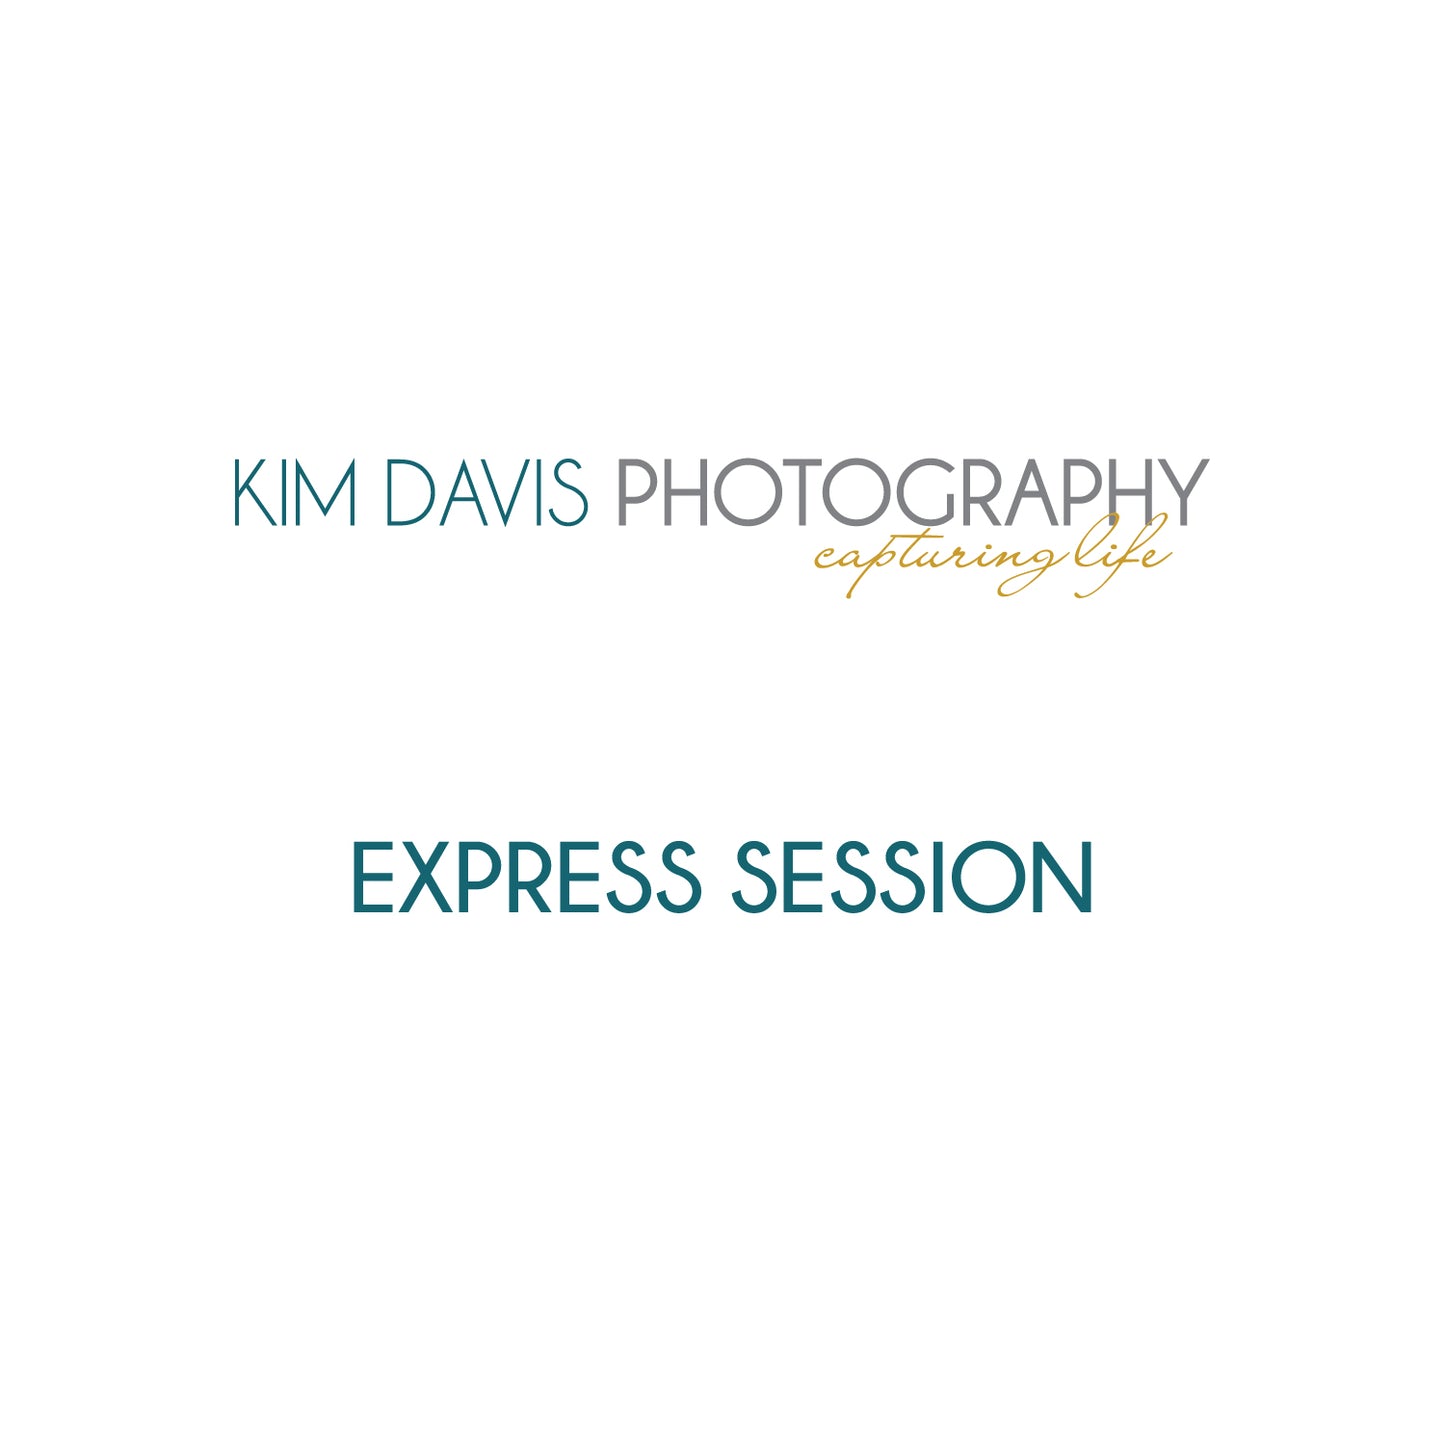 Kim Davis Photography - Express Session